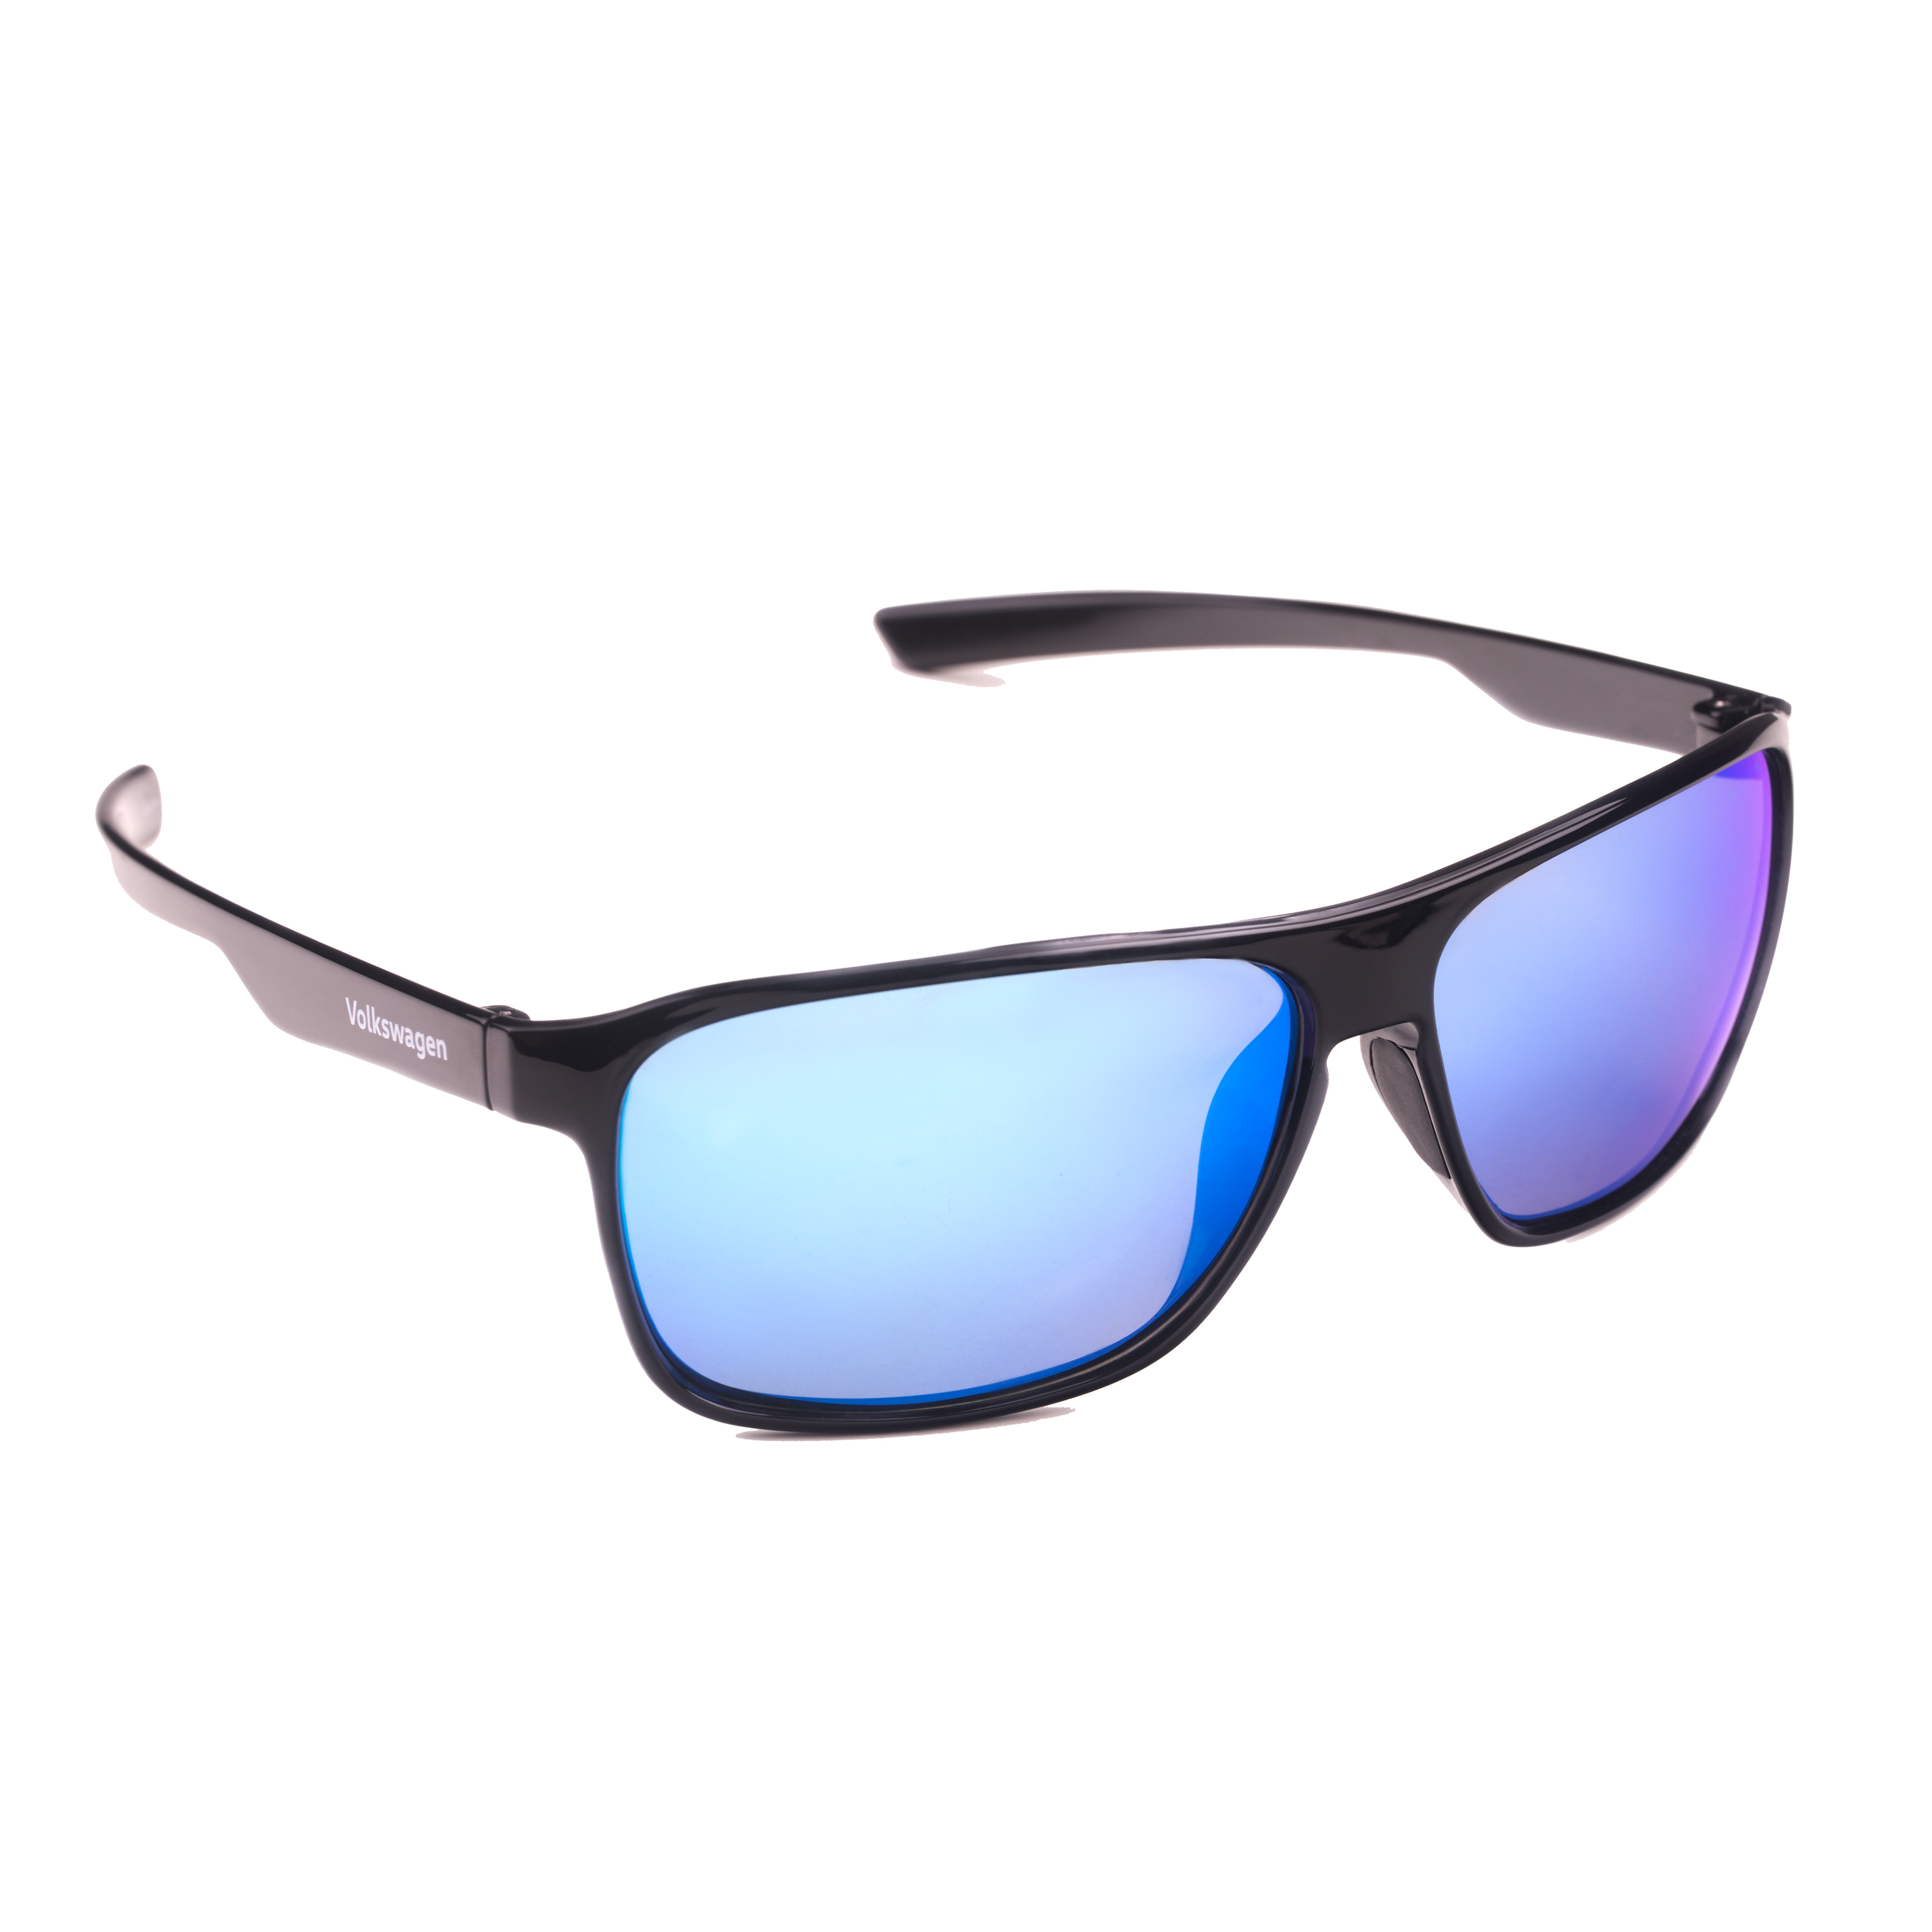 Sunglasses Women's/men's, Black/Blue